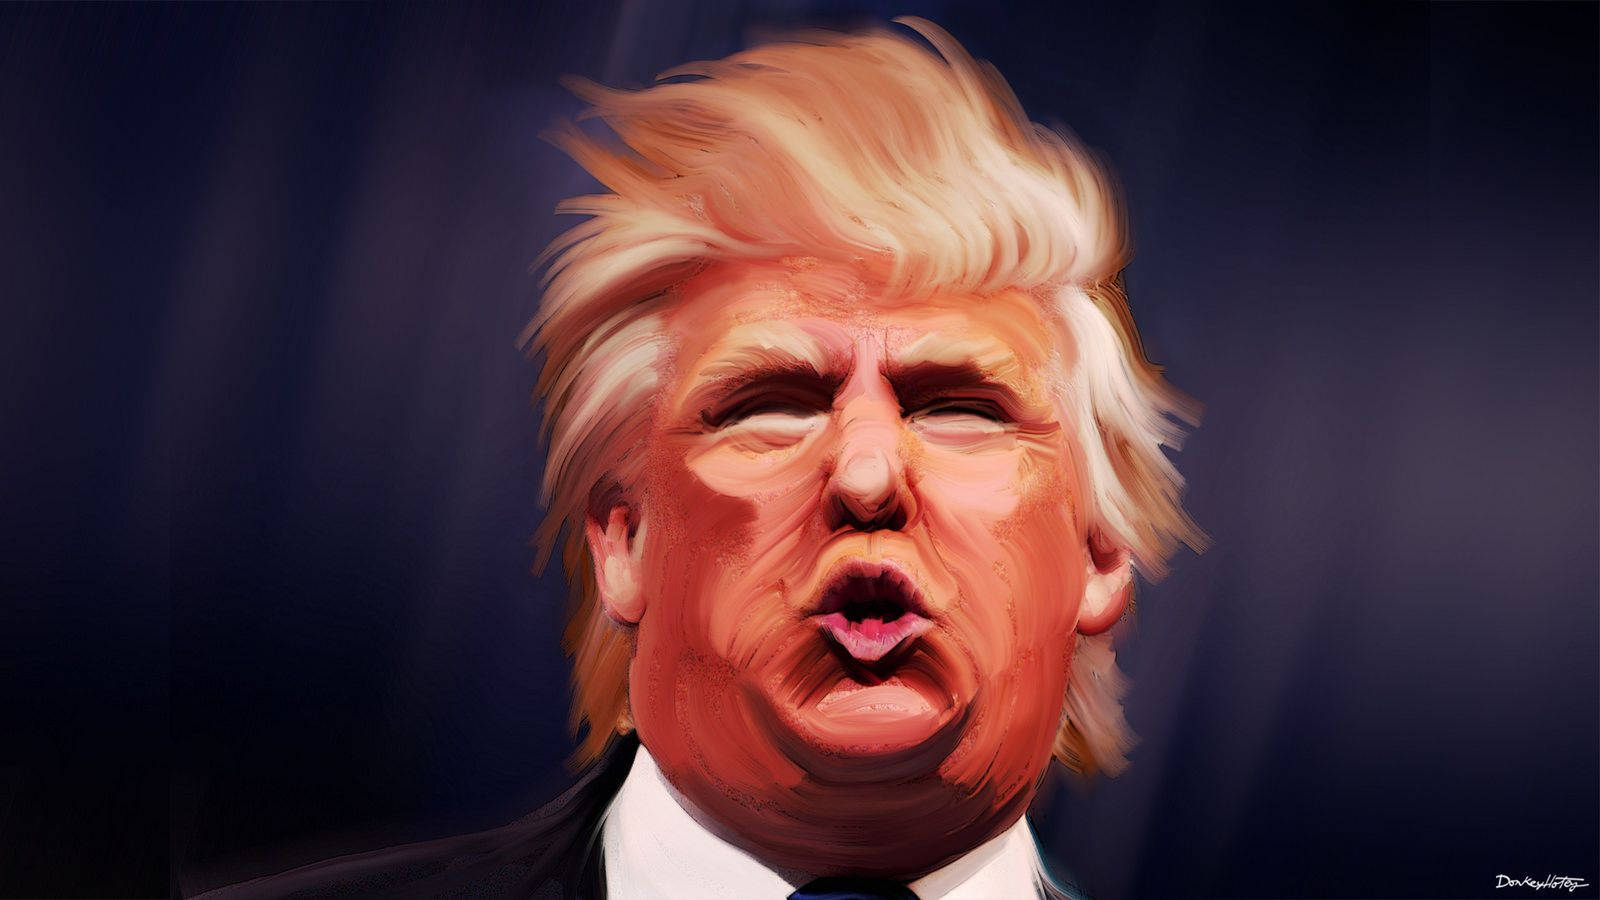 President Donald Trump Rocks The Duckface. Background